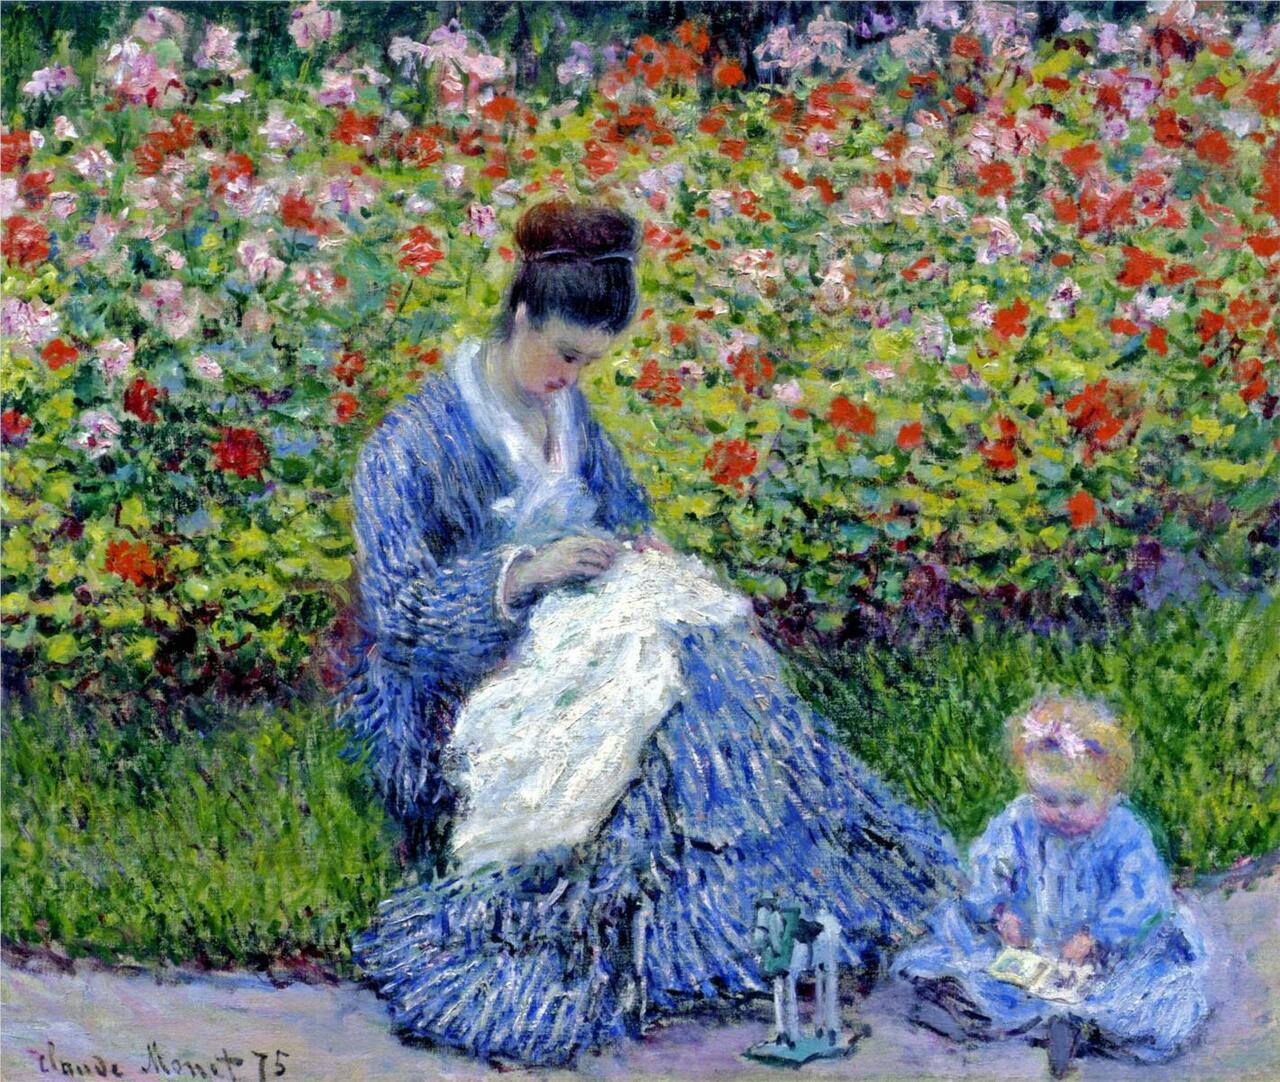 We love Claude Monet's 'Camille Monet And A Child In The Artist’s Garden In Argenteuil', 1875. https://t.co/ESq5cETPLK